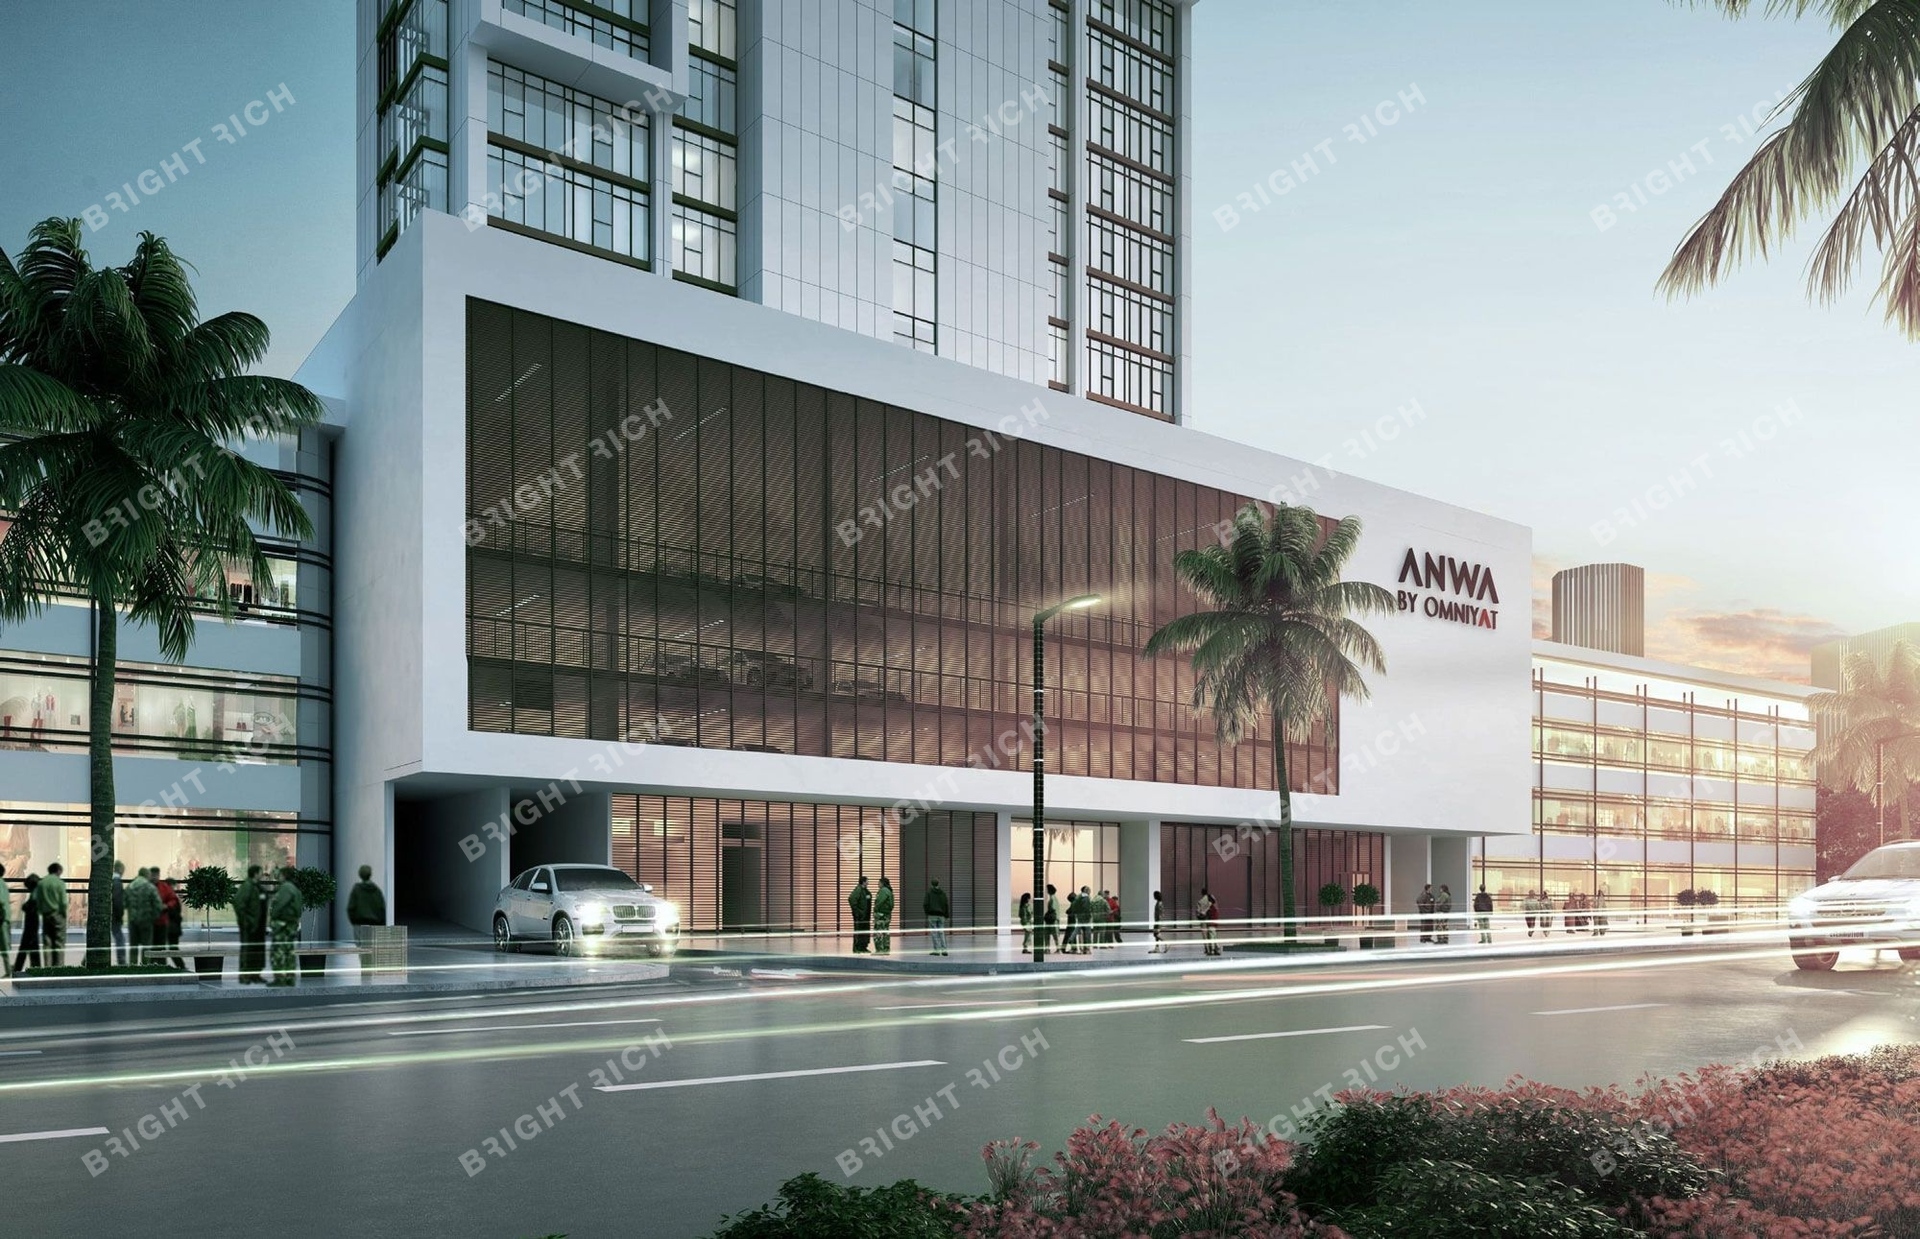 ANWA ARIA, apart complex in Dubai - 3